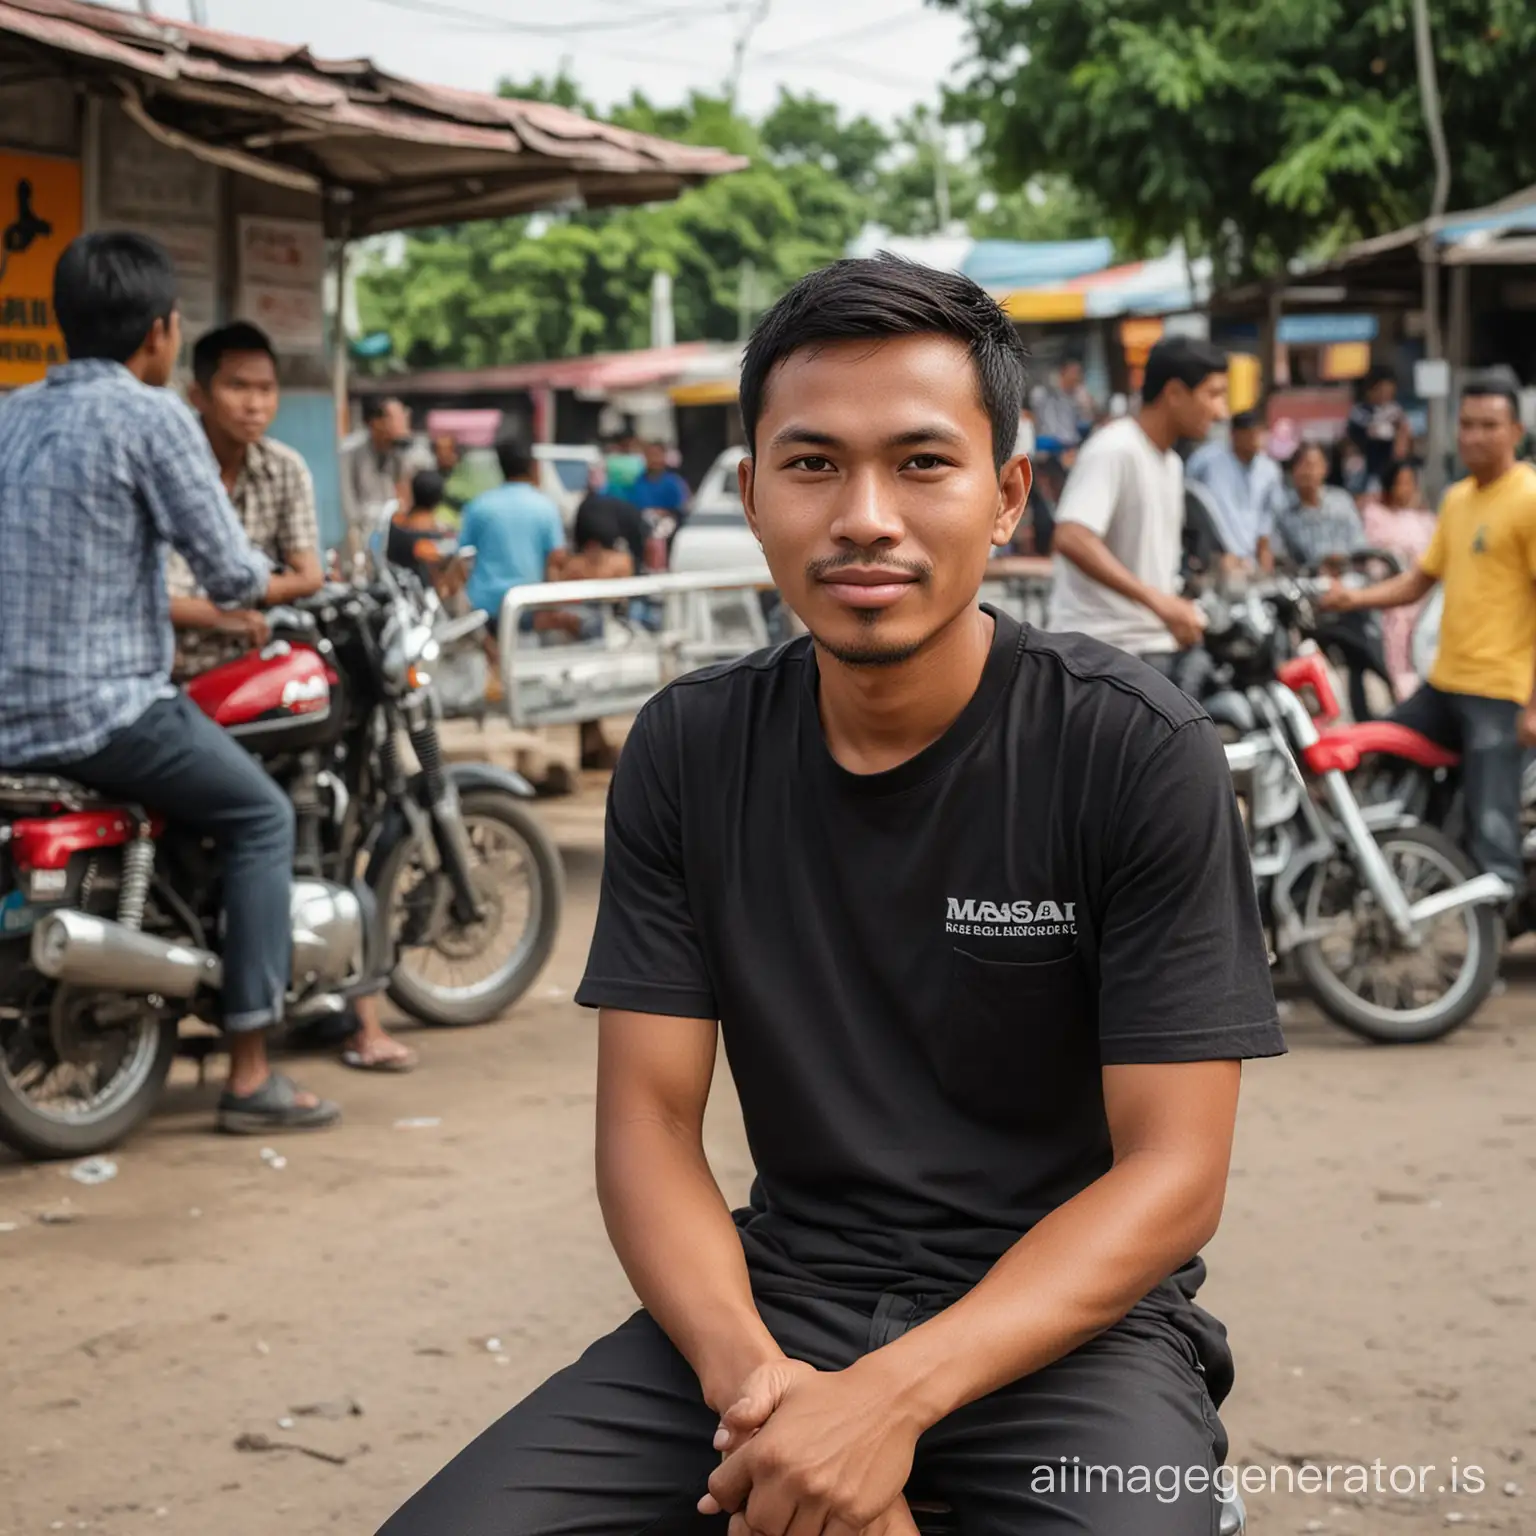 Seorang pria indonesai berusia 30 tahun berwajah bersih,rambut pendek, sedang duduk bersama teman-teman dipangkalan ojek. Baju pria tersebut berwana hitam bertuliskan nama "Masdi". Bacground di sebuah pangkalan ojek tepi jalan. Sangat realistis